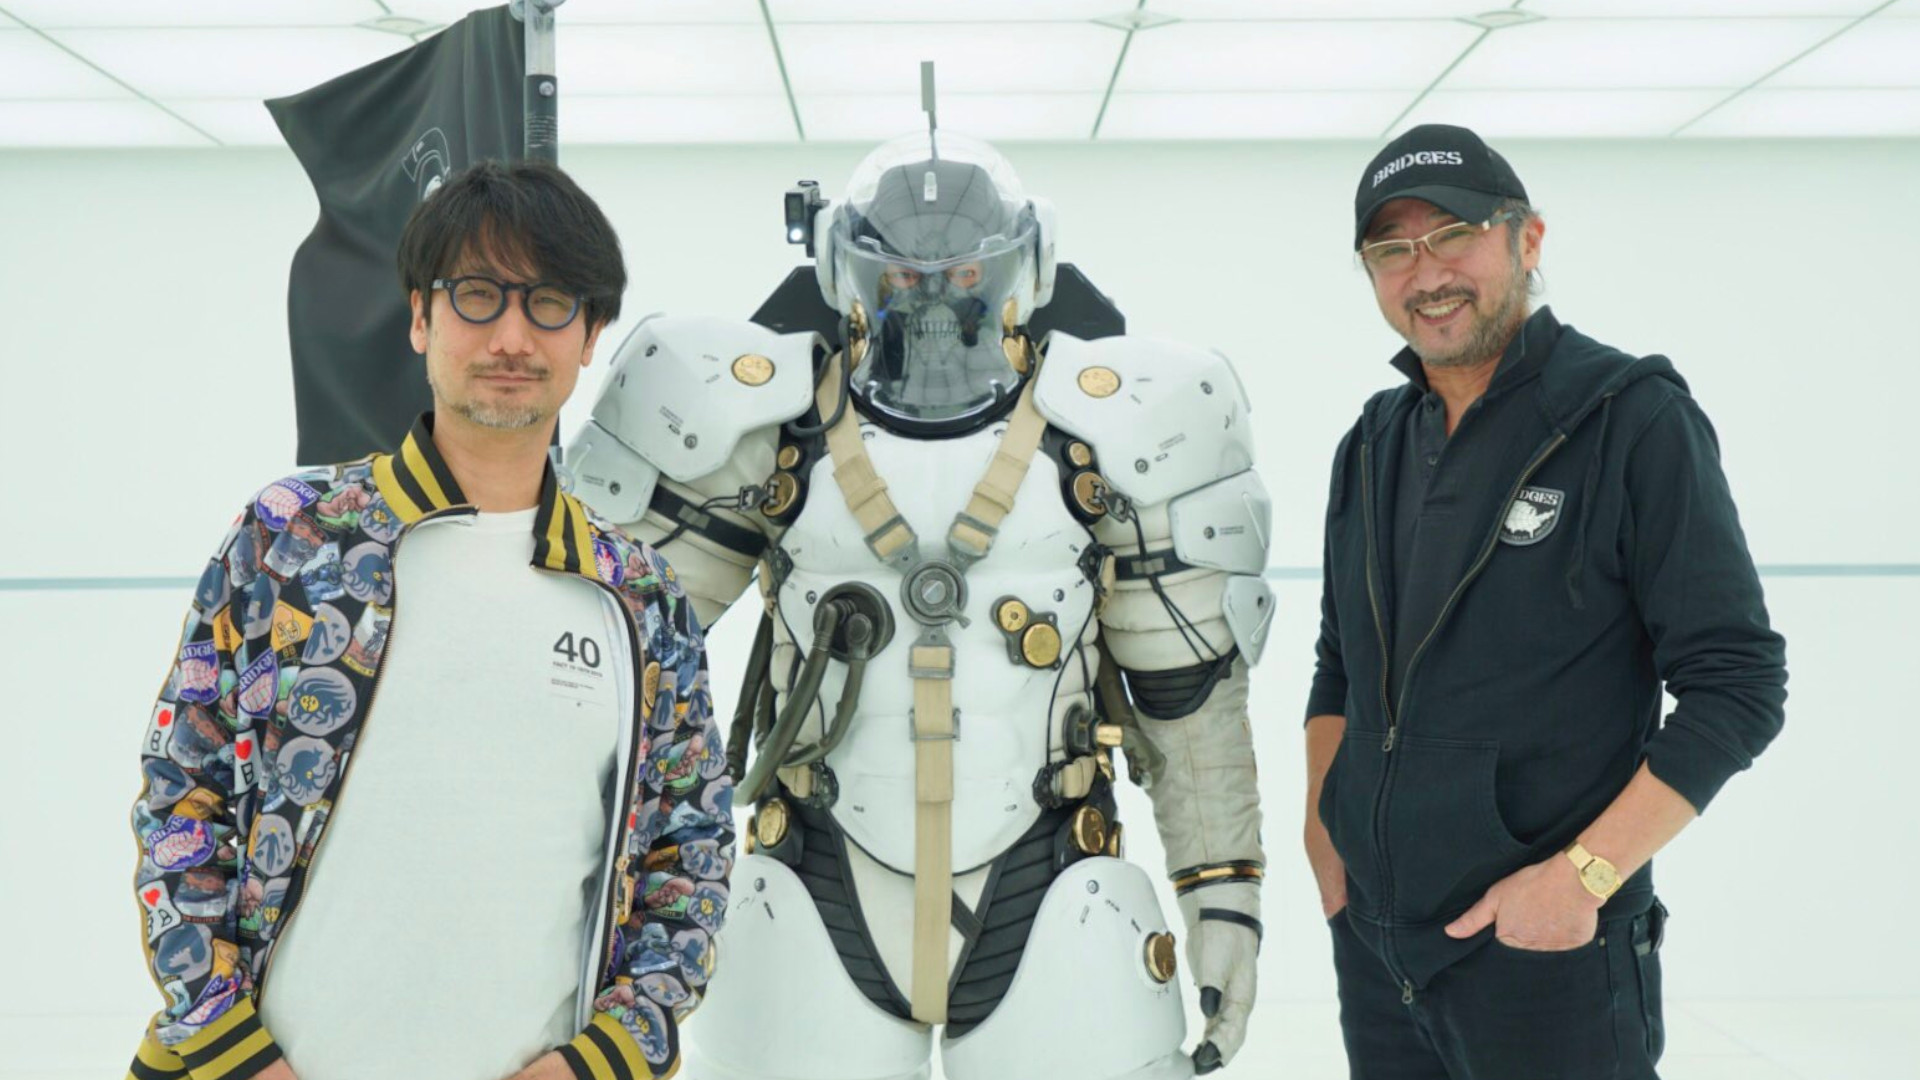 Kojima Productions será independente enquanto Hideo Kojima estiver vivo -  NerdBunker